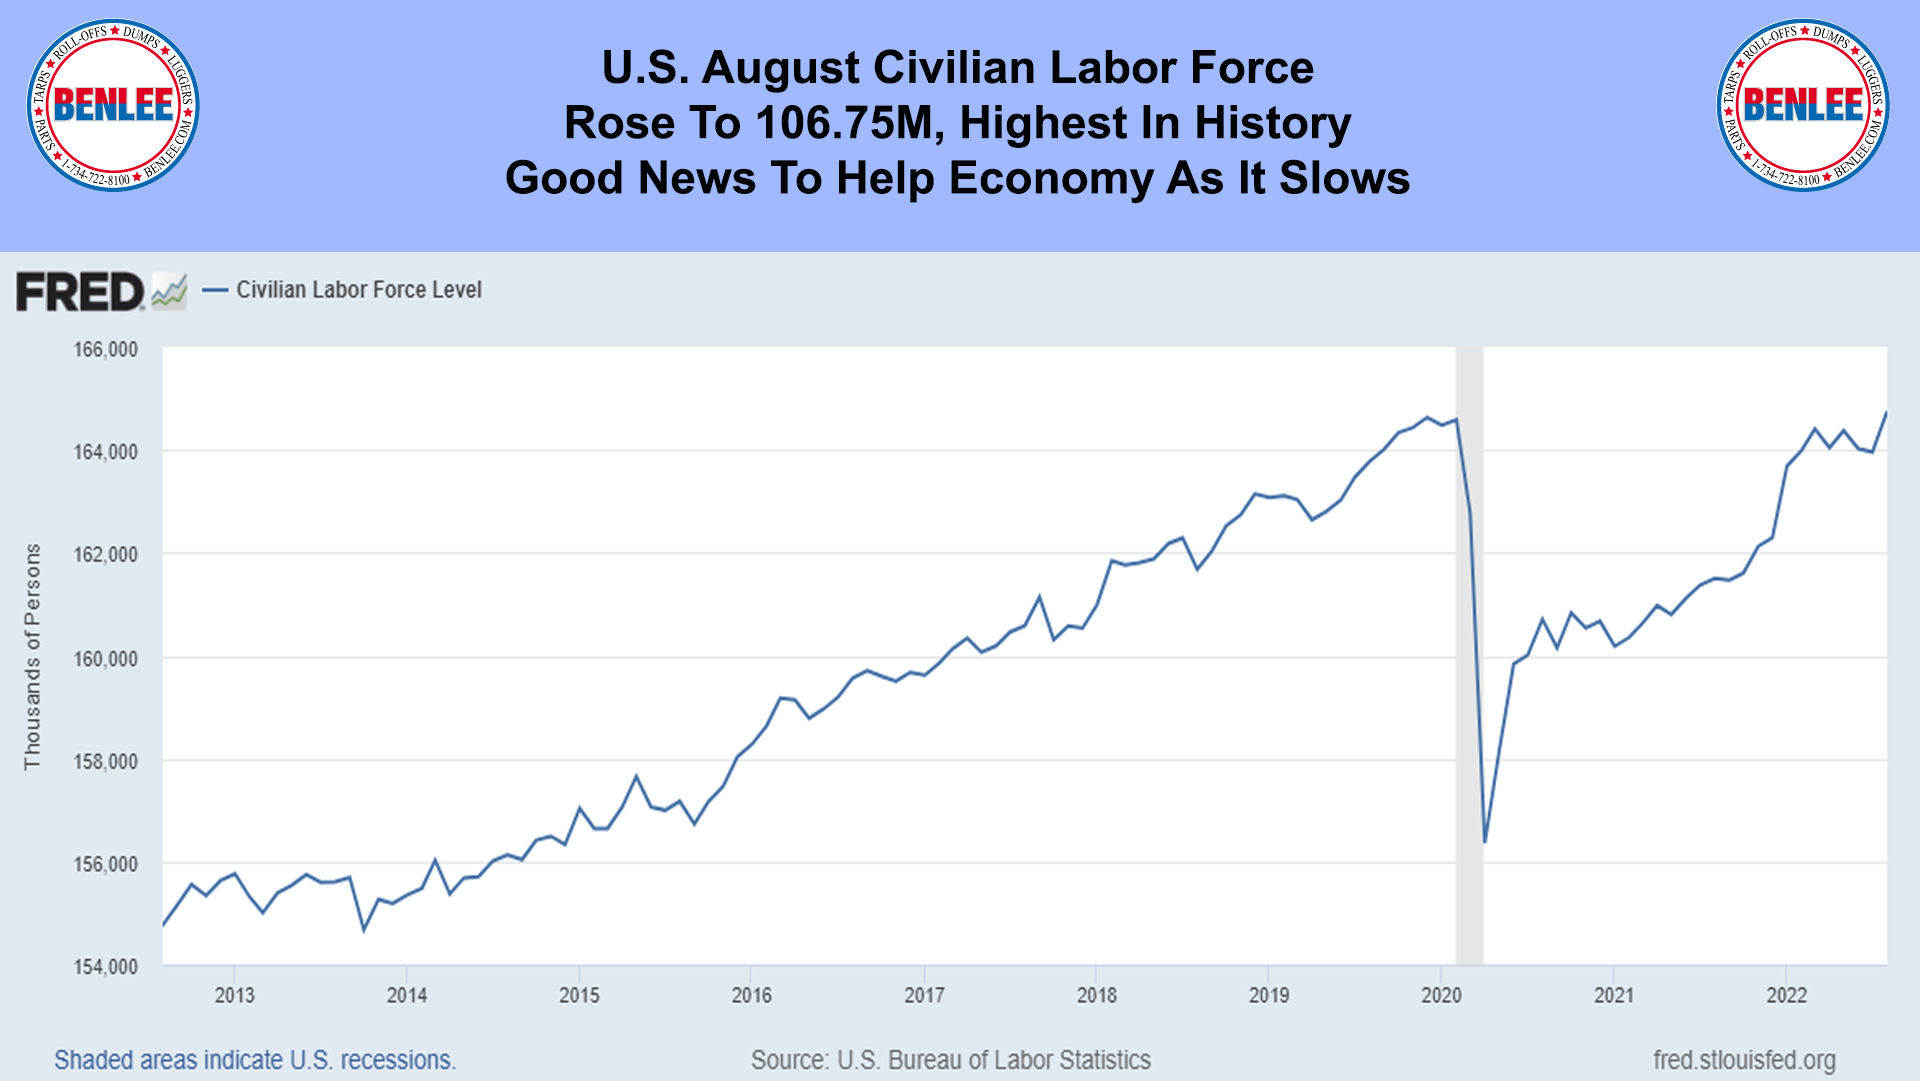 U.S. August Civilian Labor Force